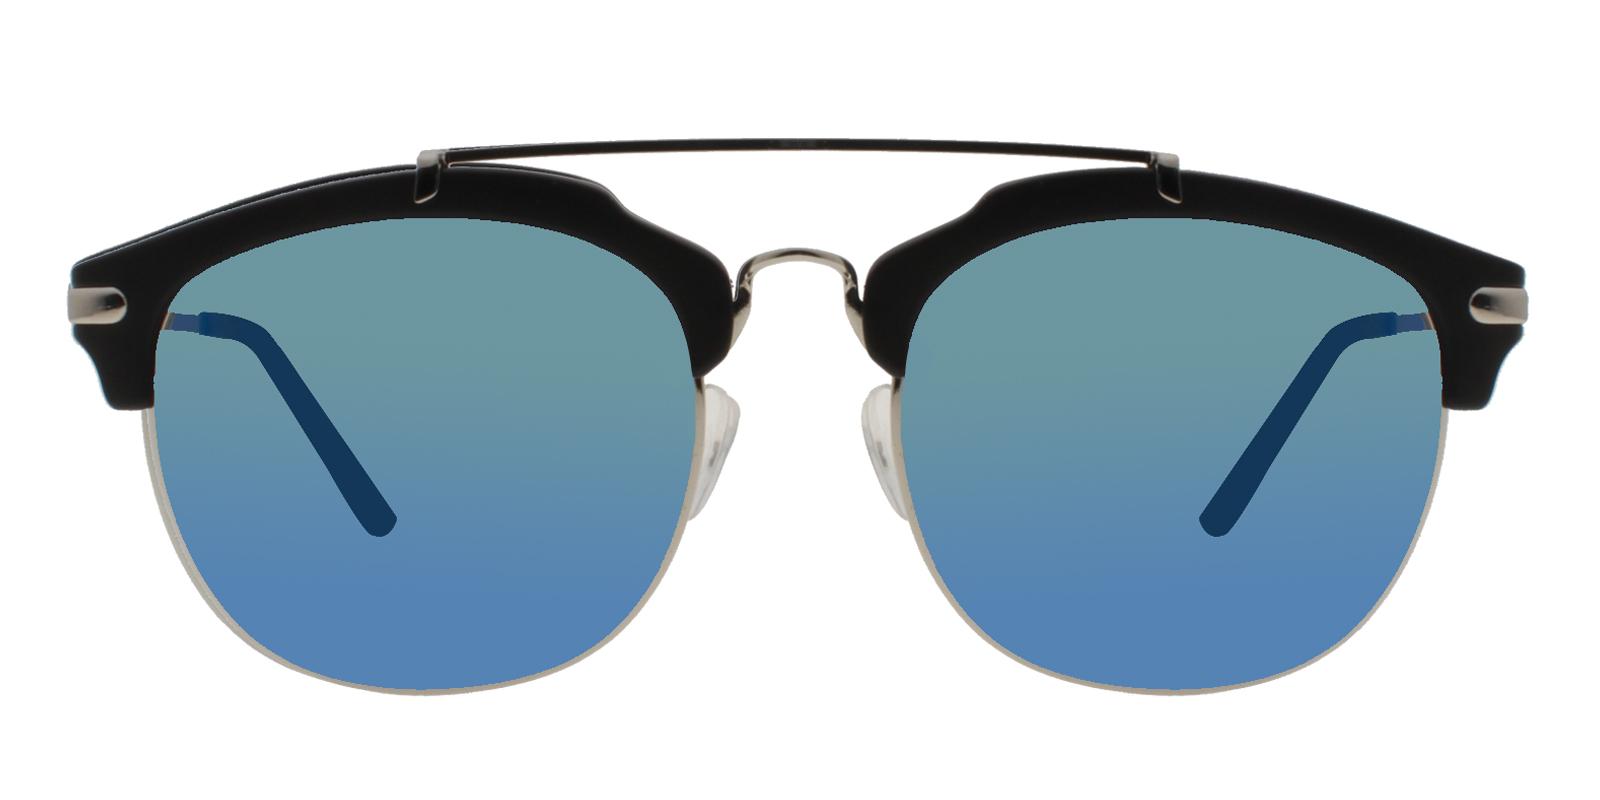 Cuba Black Acetate NosePads , Sunglasses Frames from ABBE Glasses